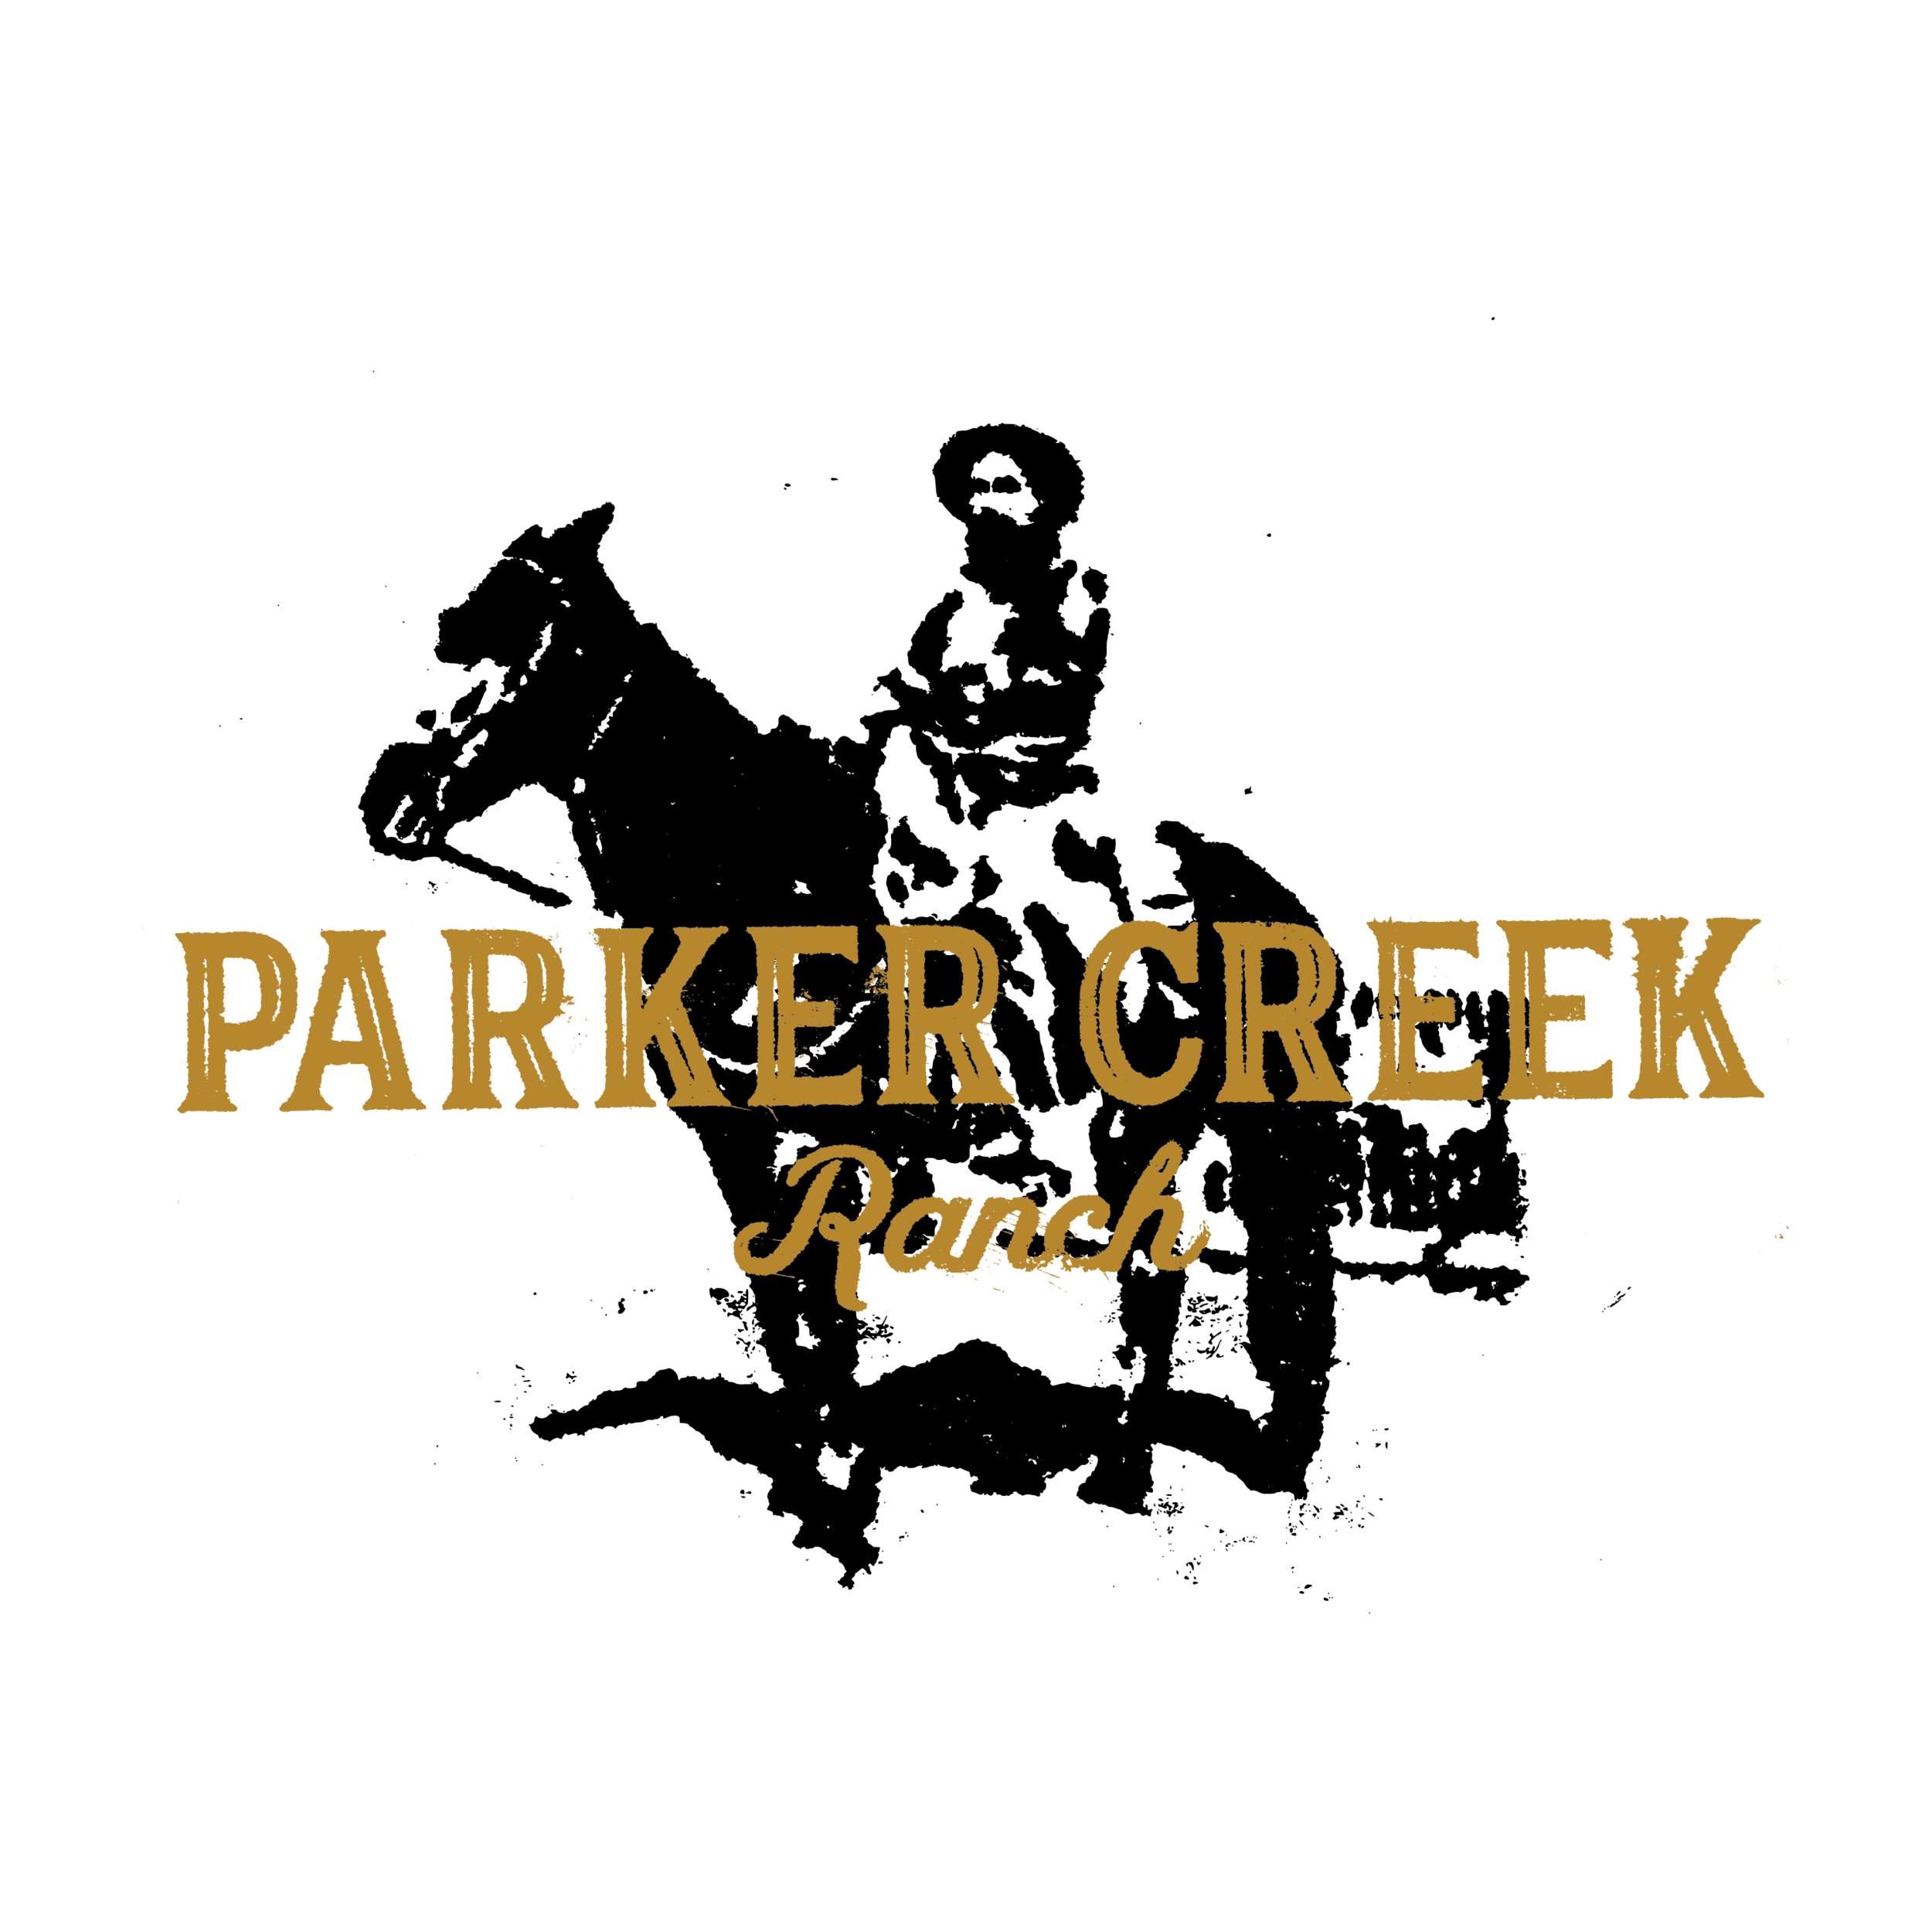 Parker Creek Ranch